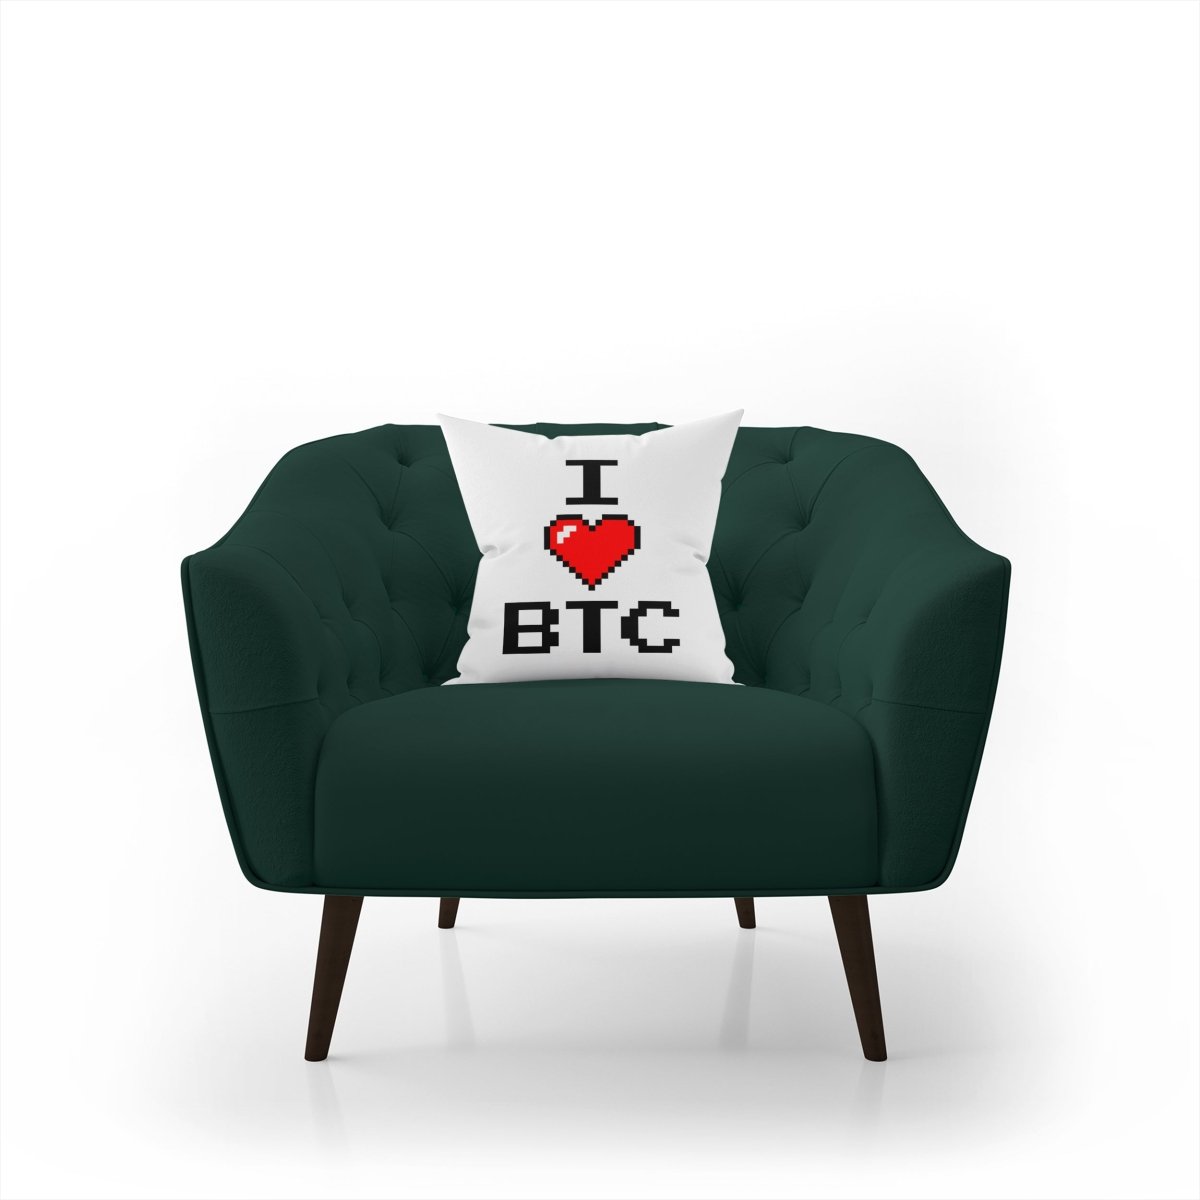 Bitcoin Merch - I Love BTC Pillow displayed on green armchair.